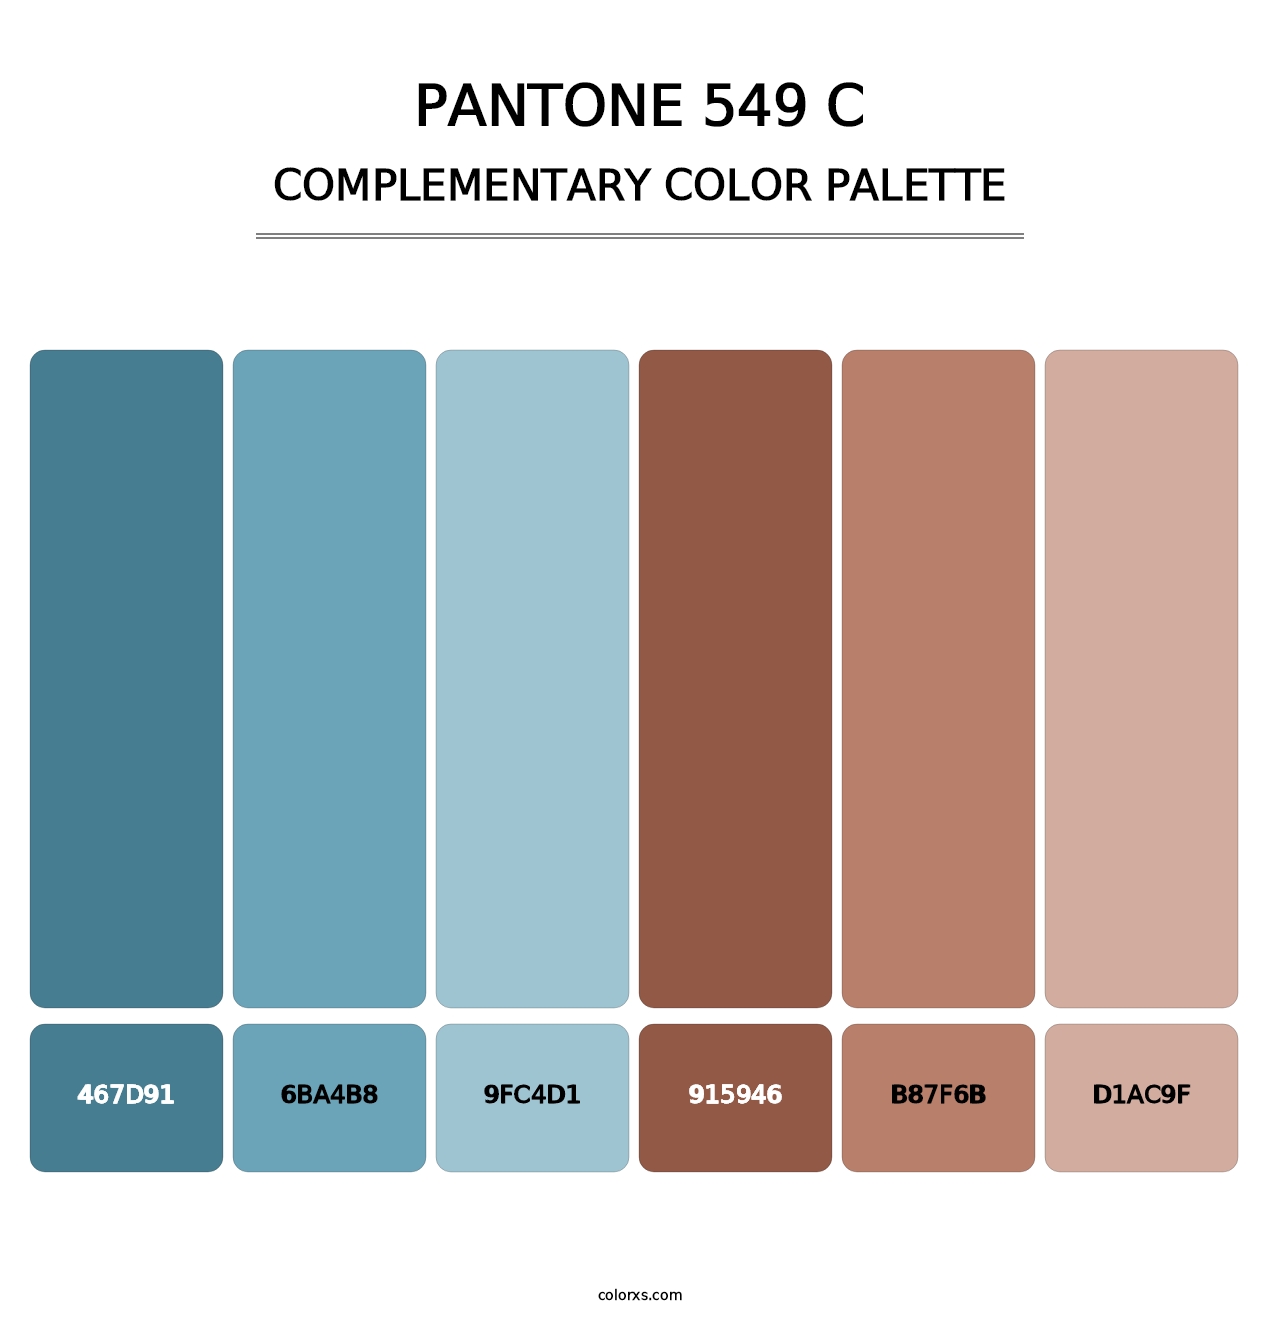 PANTONE 549 C - Complementary Color Palette